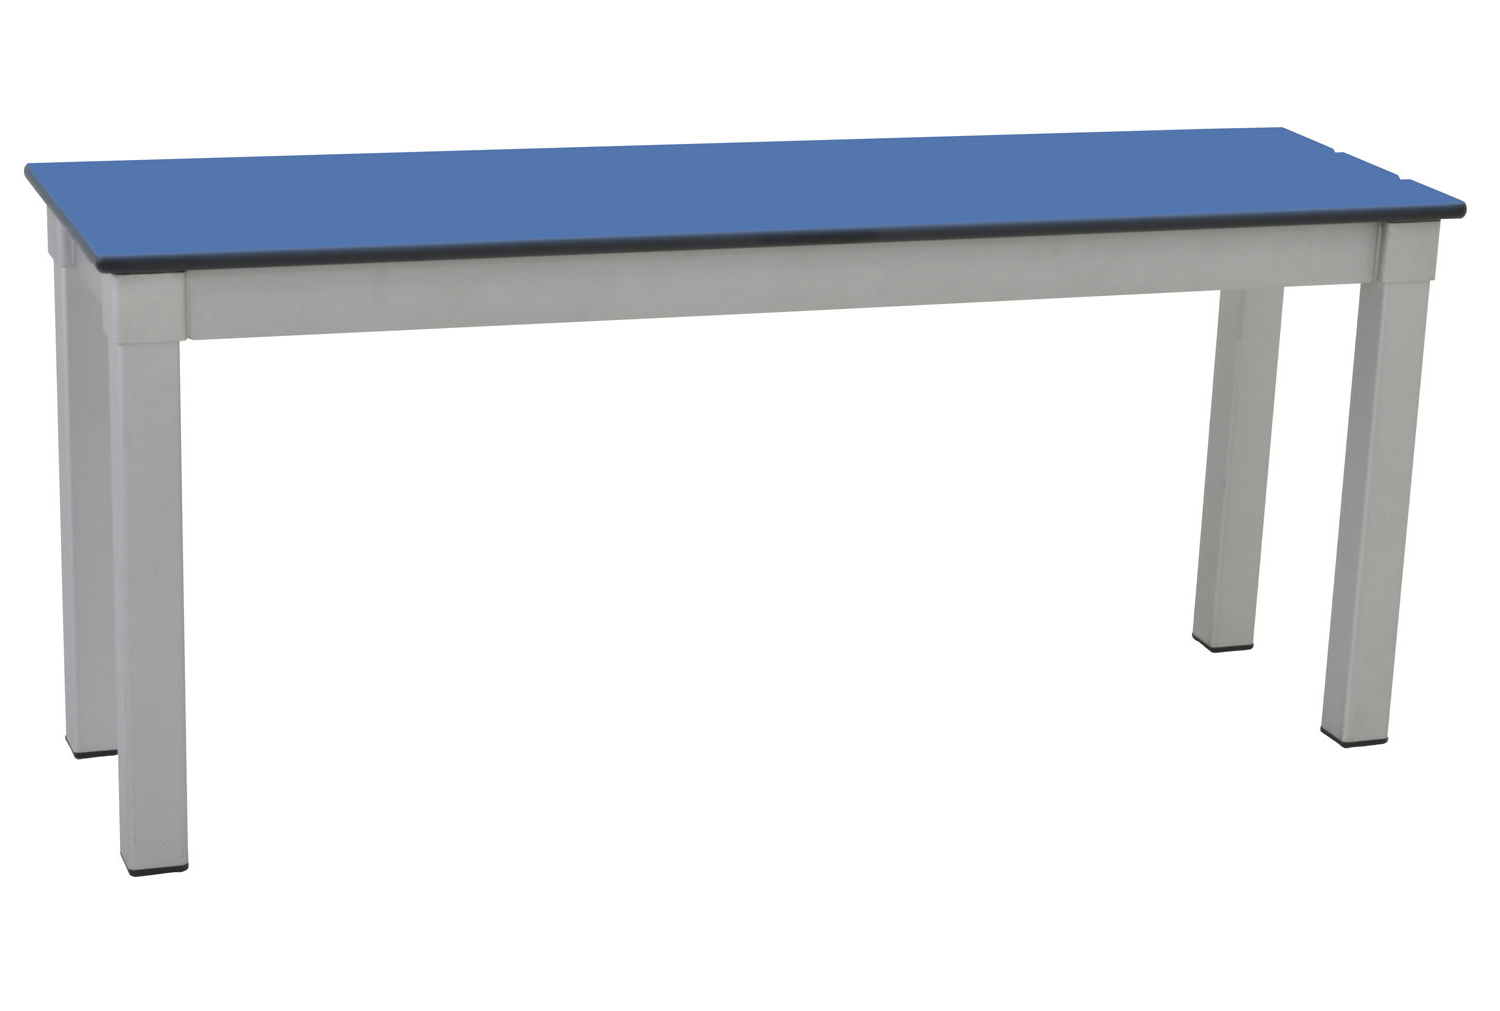 Gopak Enviro Compact Outdoor Bench With Solid Top, 150wx46d (cm), Warm Grey